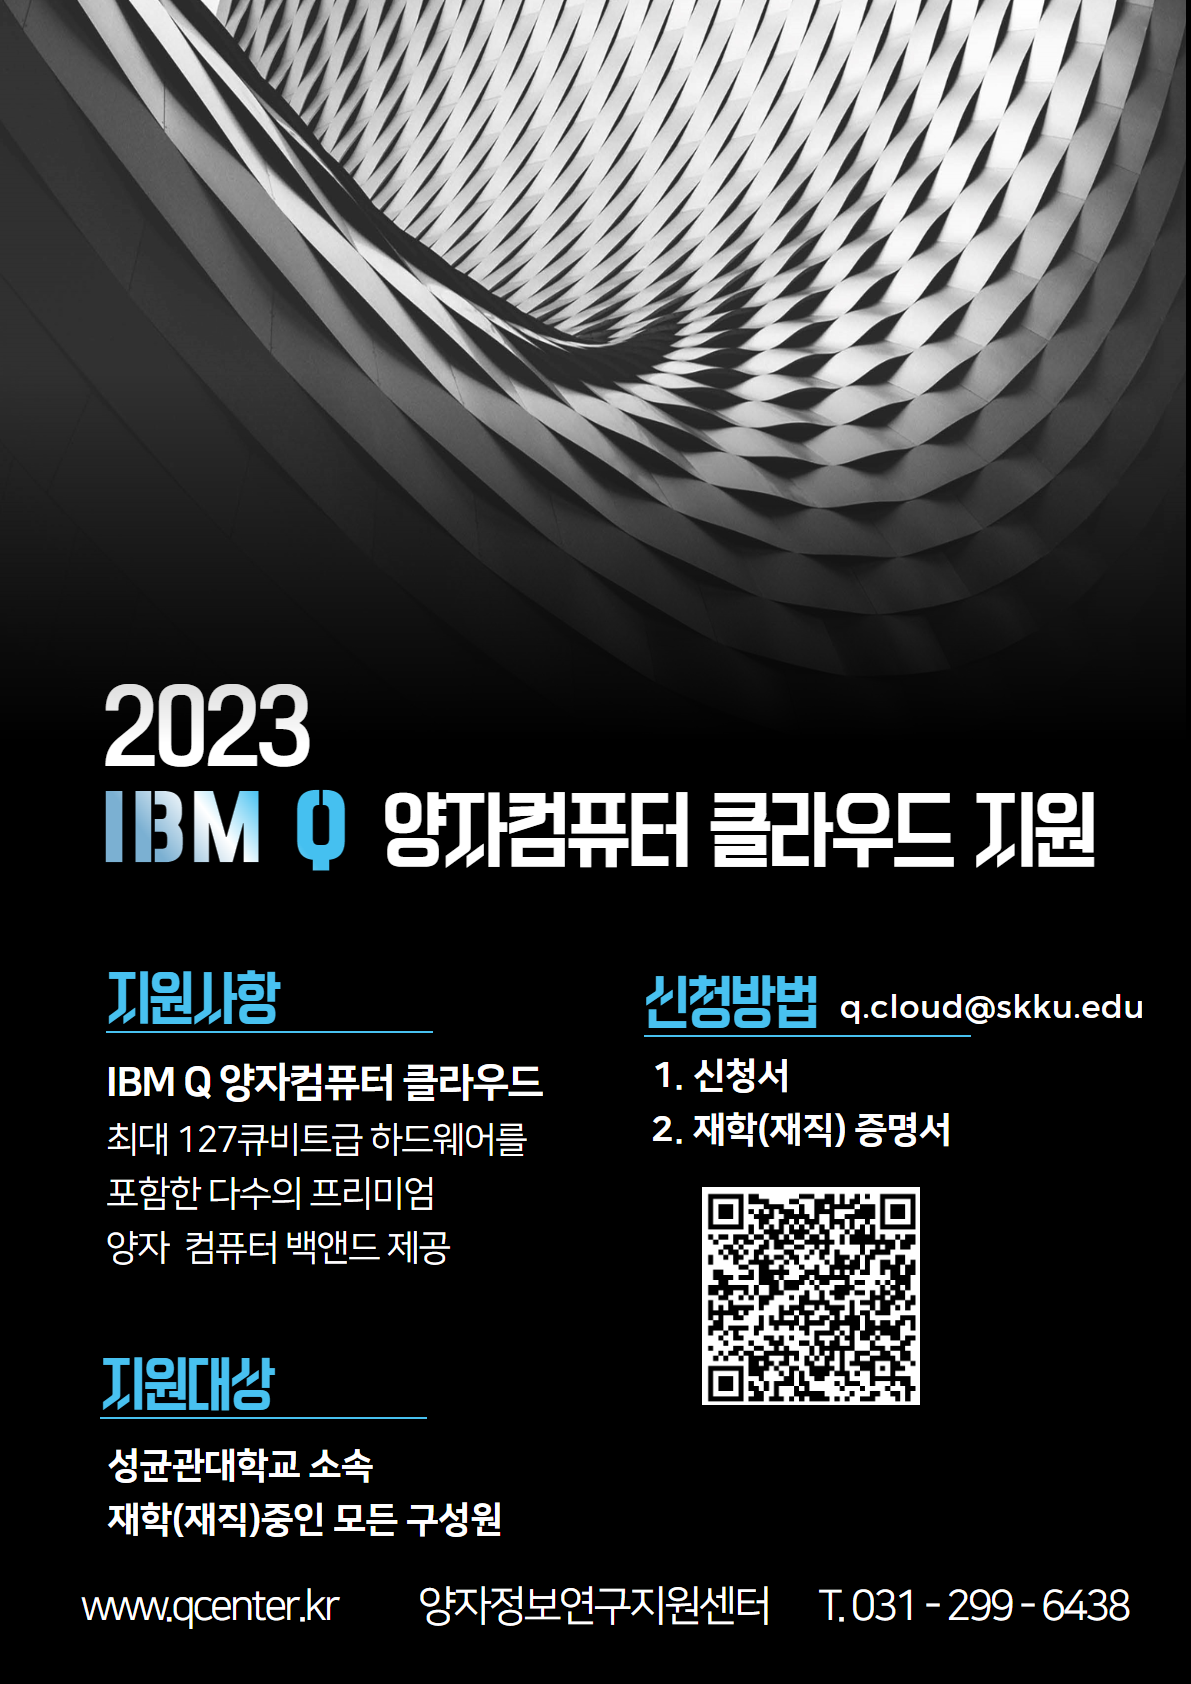 IBM Q 양자컴퓨터 클라우드 성균관대학교 홍보 포스터